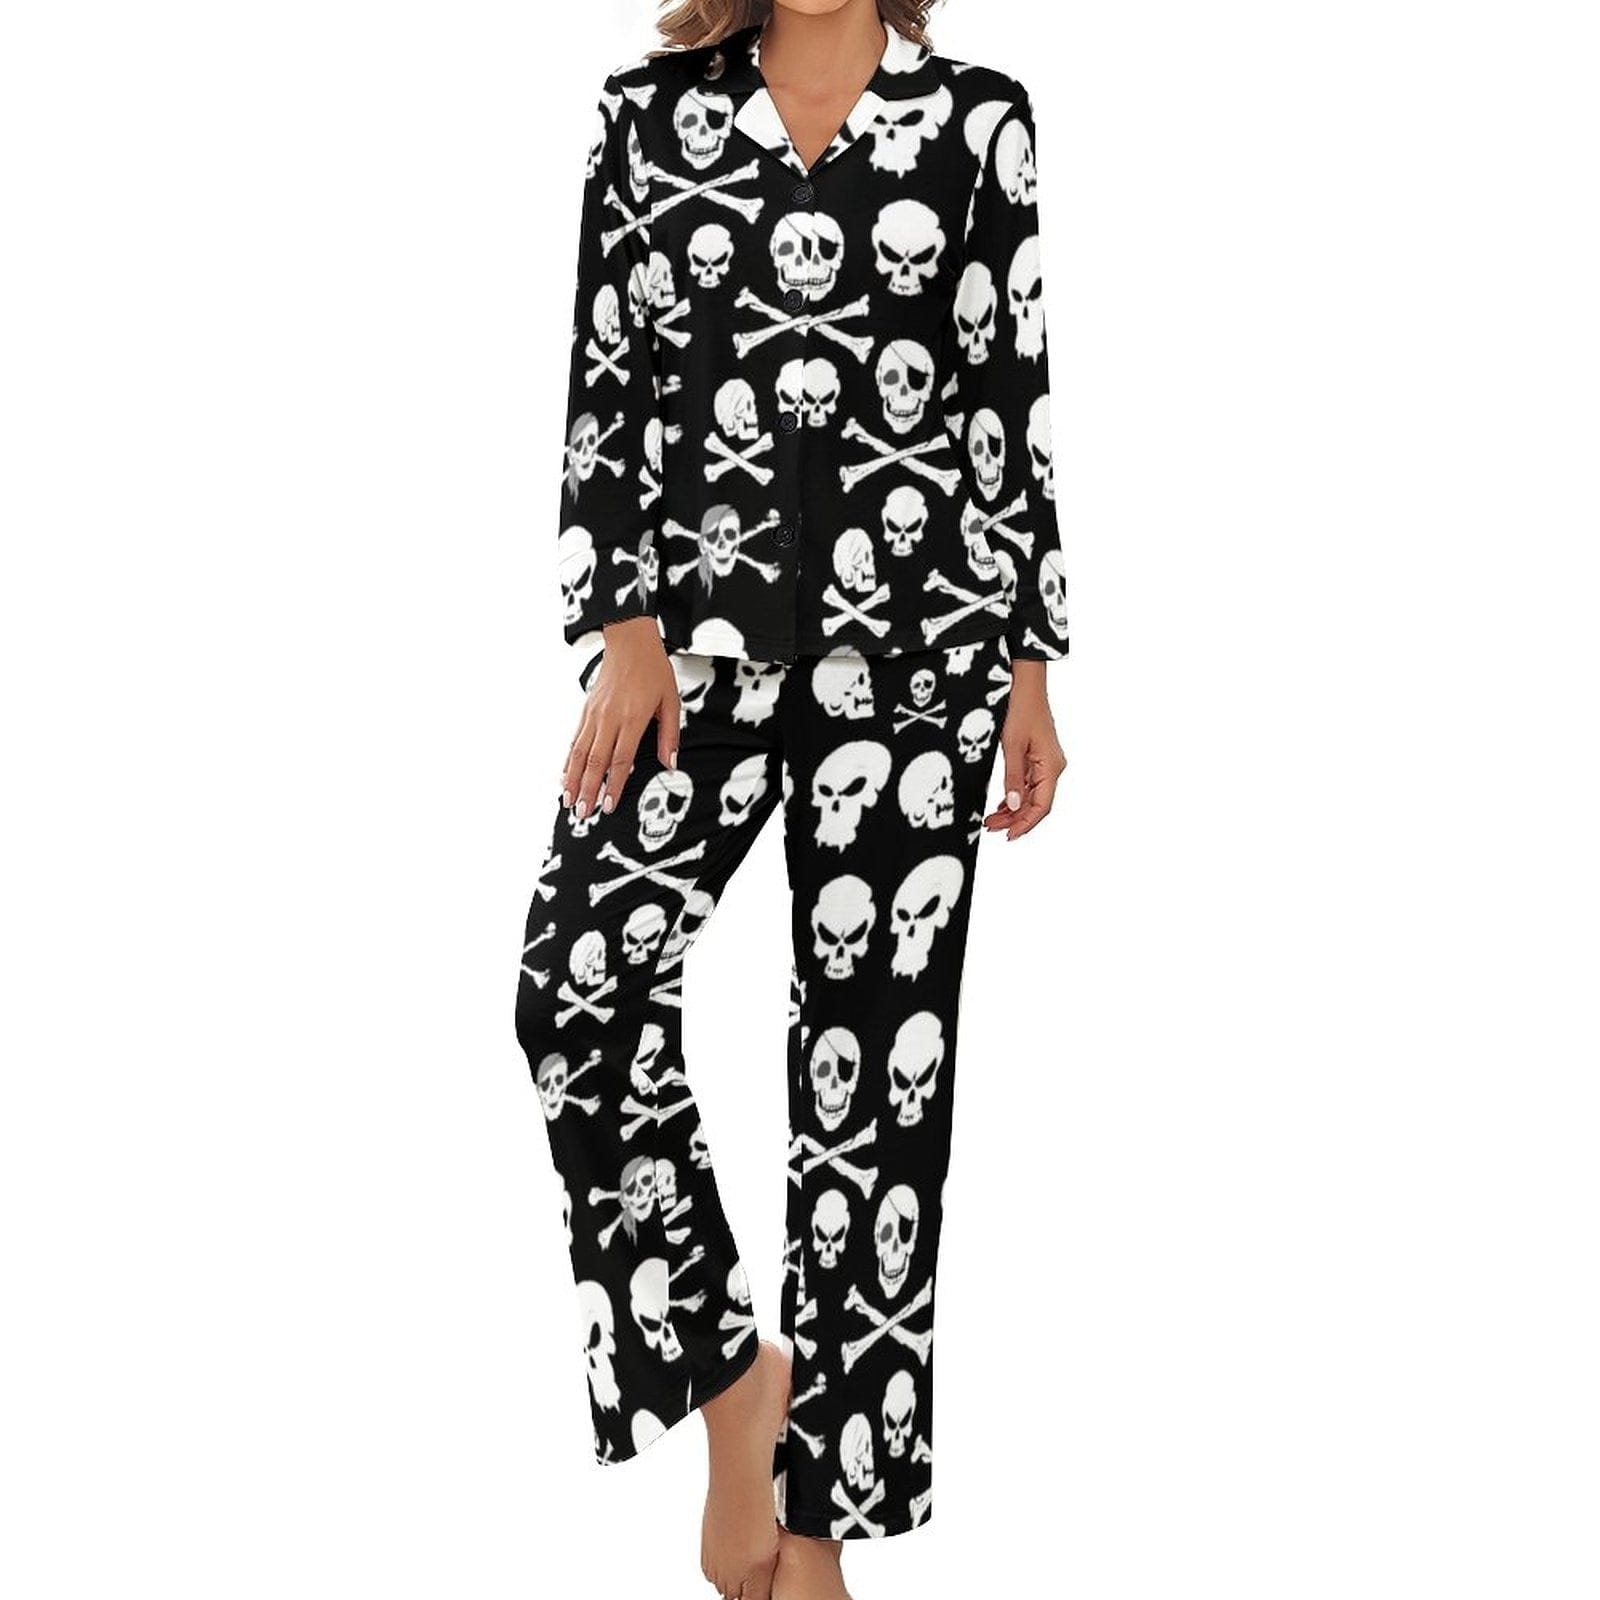 Women’s Black Skull Crossbones Long-Sleeve 2 Piece Sleepwear Pajama Set